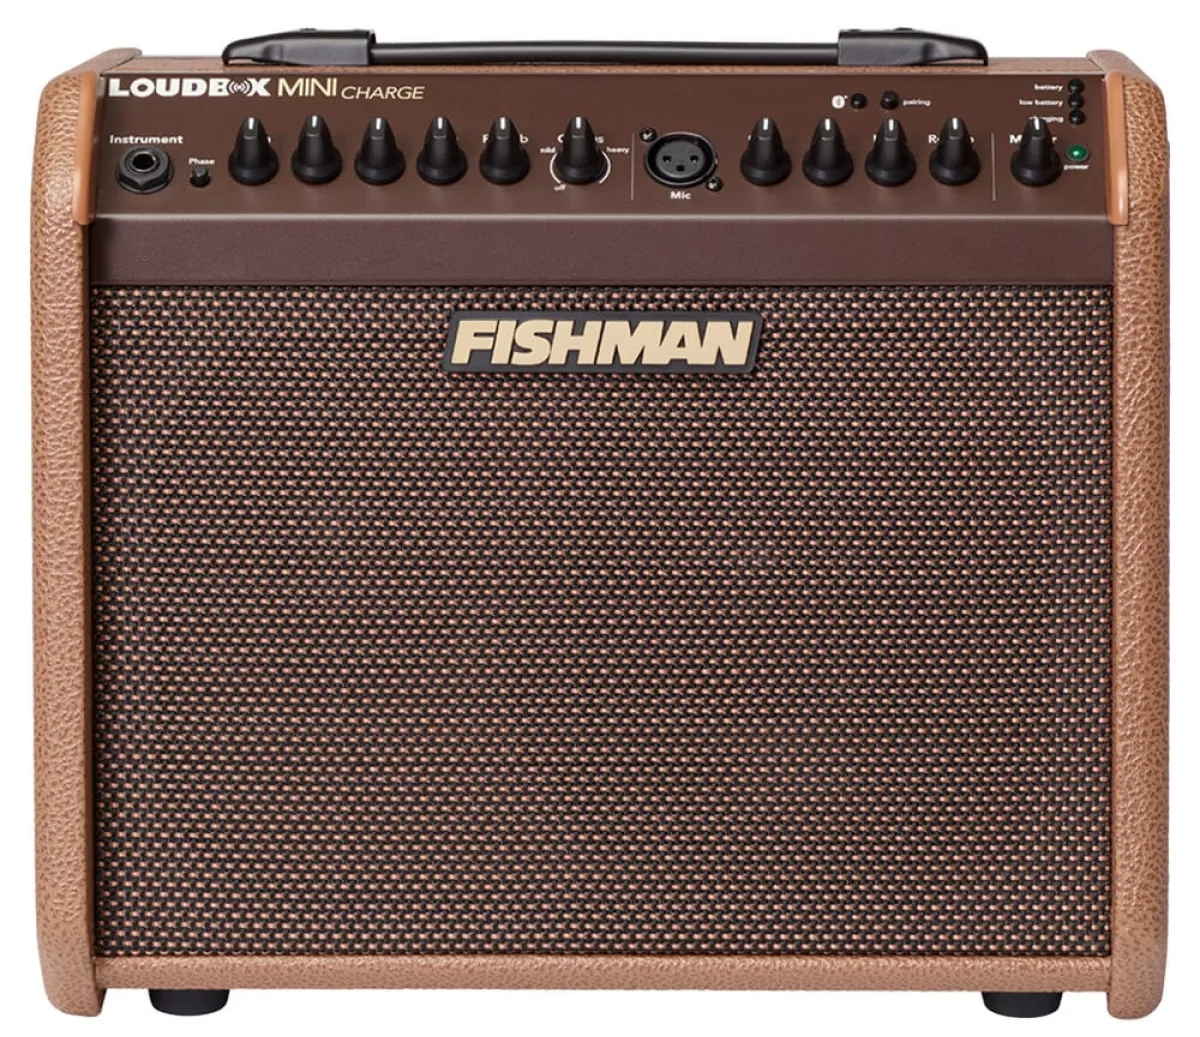 Fishman Loudbox Mini Charge 60-Watt Battery Powered Acoustic Combo Amp